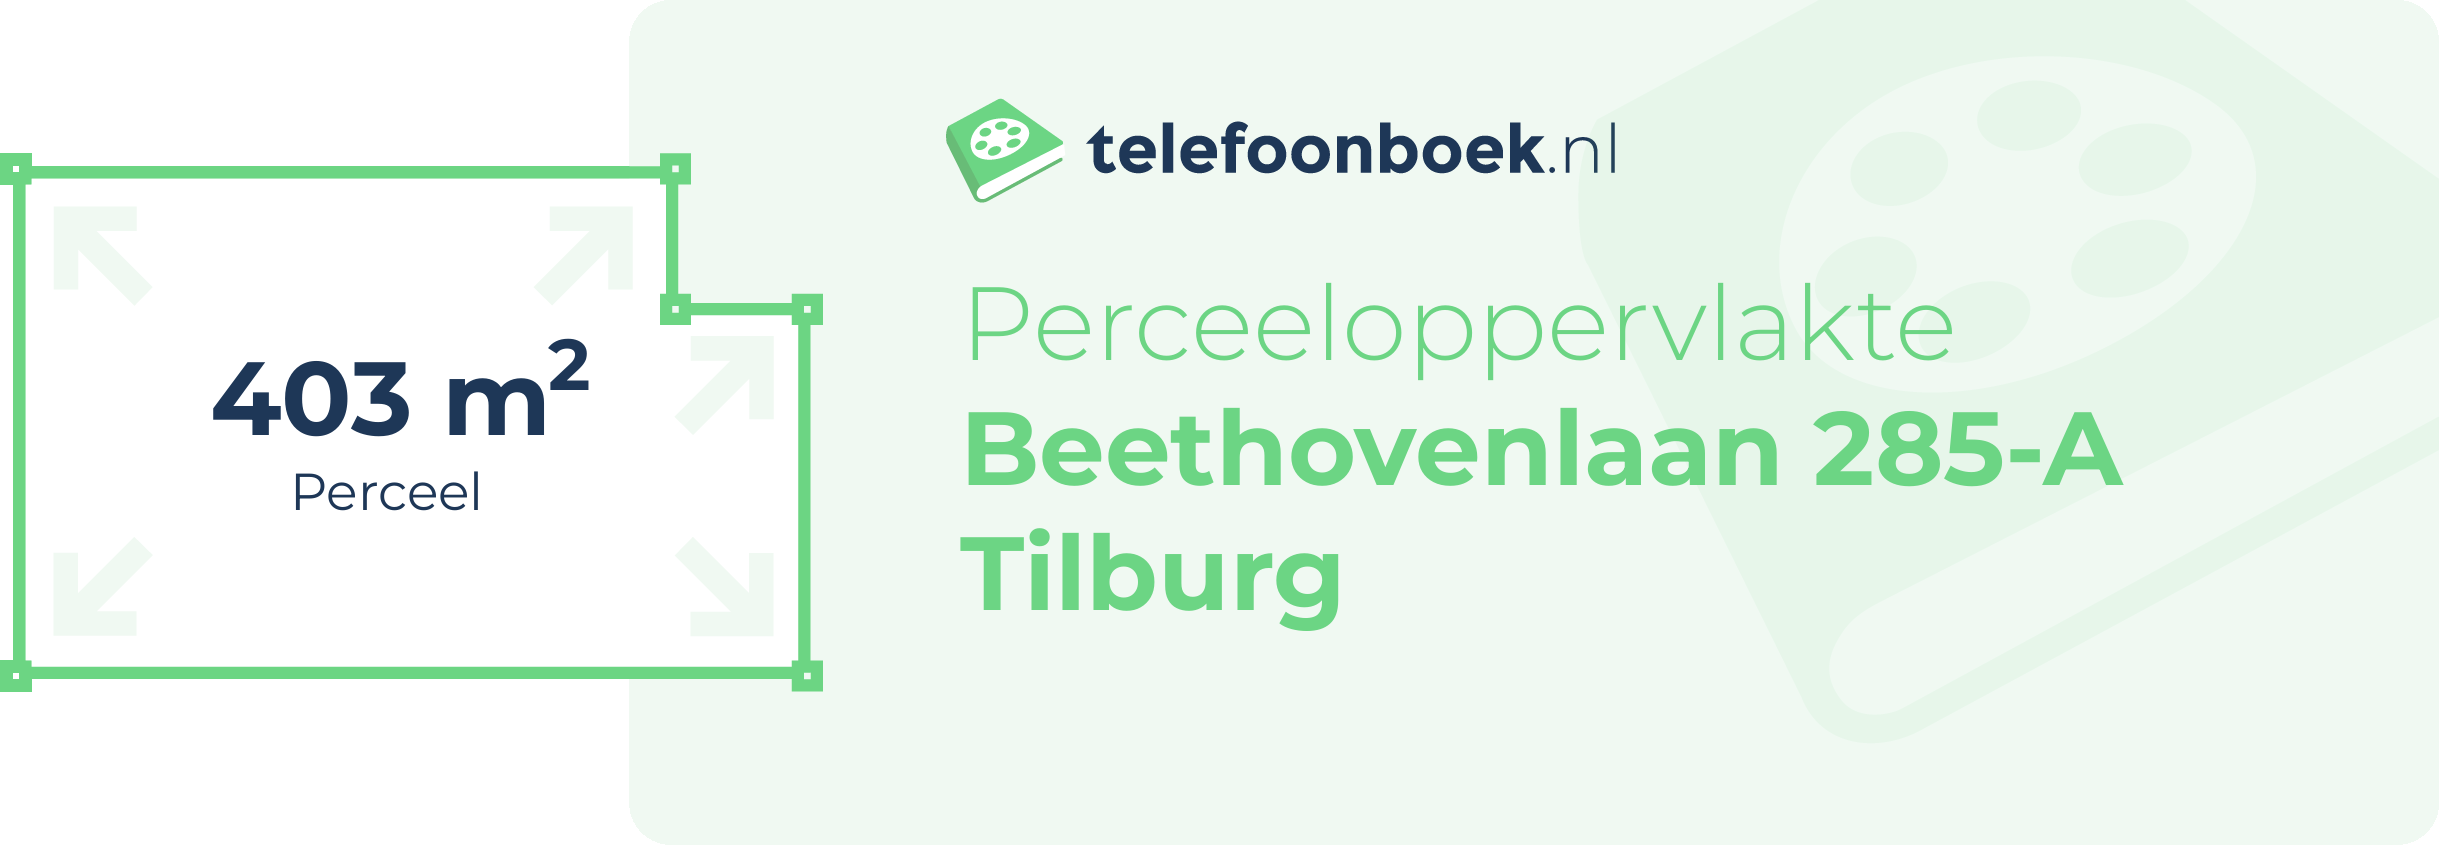 Perceeloppervlakte Beethovenlaan 285-A Tilburg